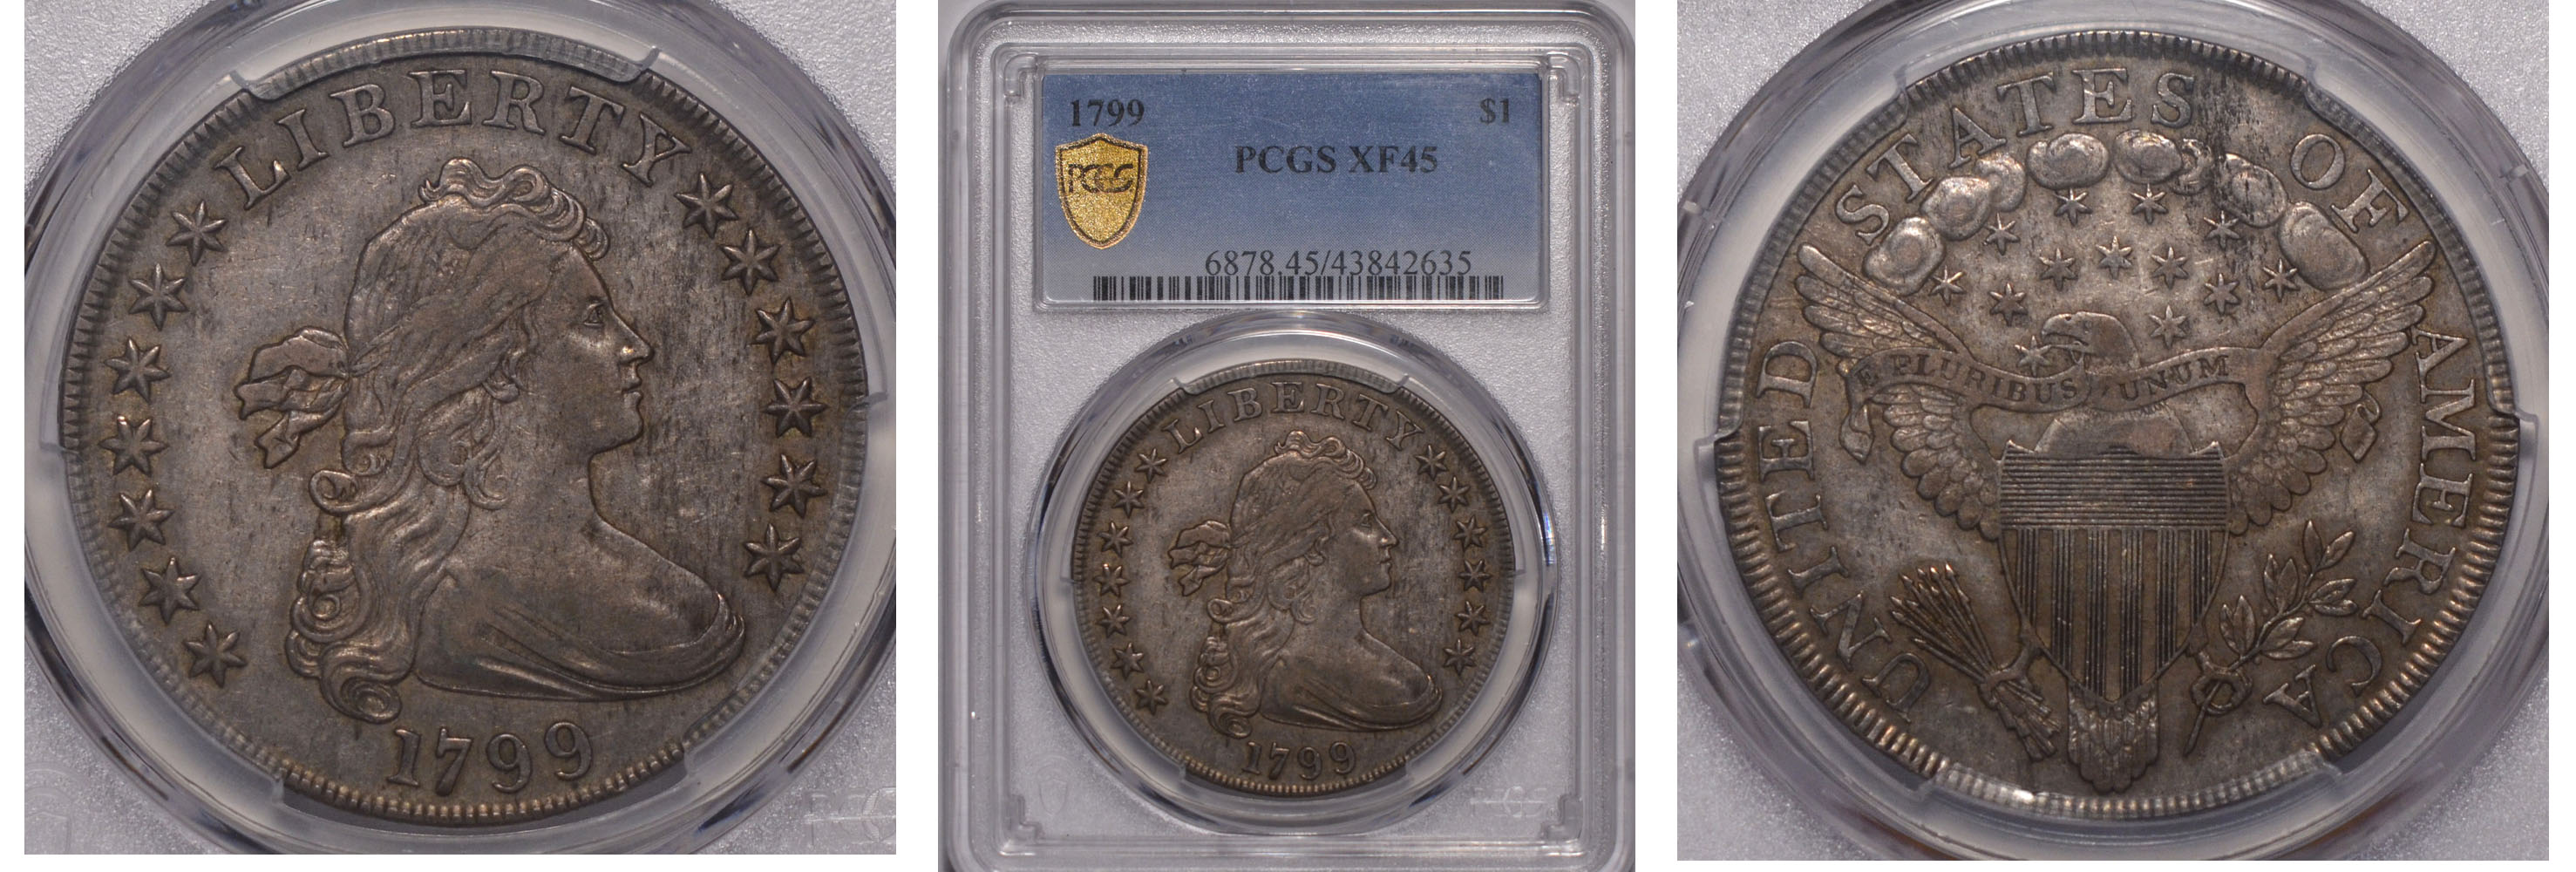 1799 Draped Bust Silver Dollar $1 PCGS XF45